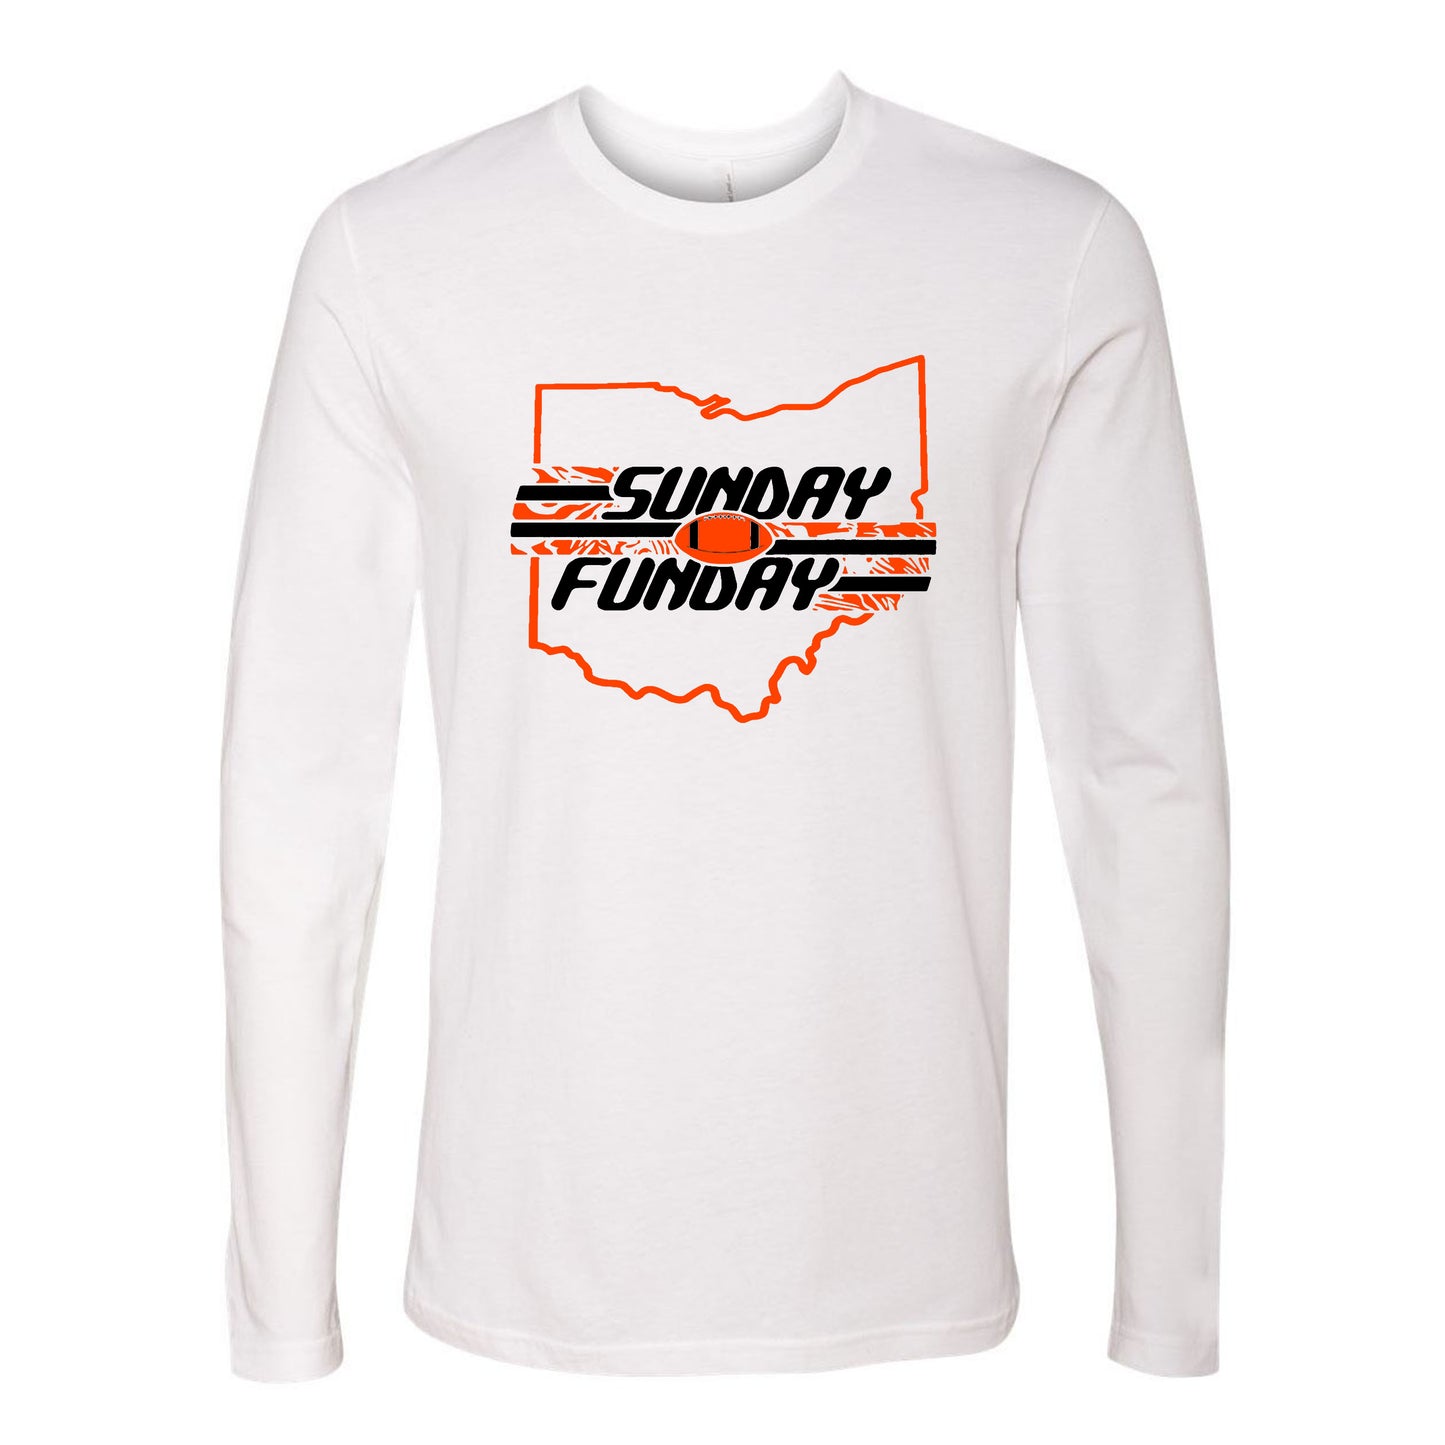 Cincinnati Football Sunday Funday Shirt for Football Fans